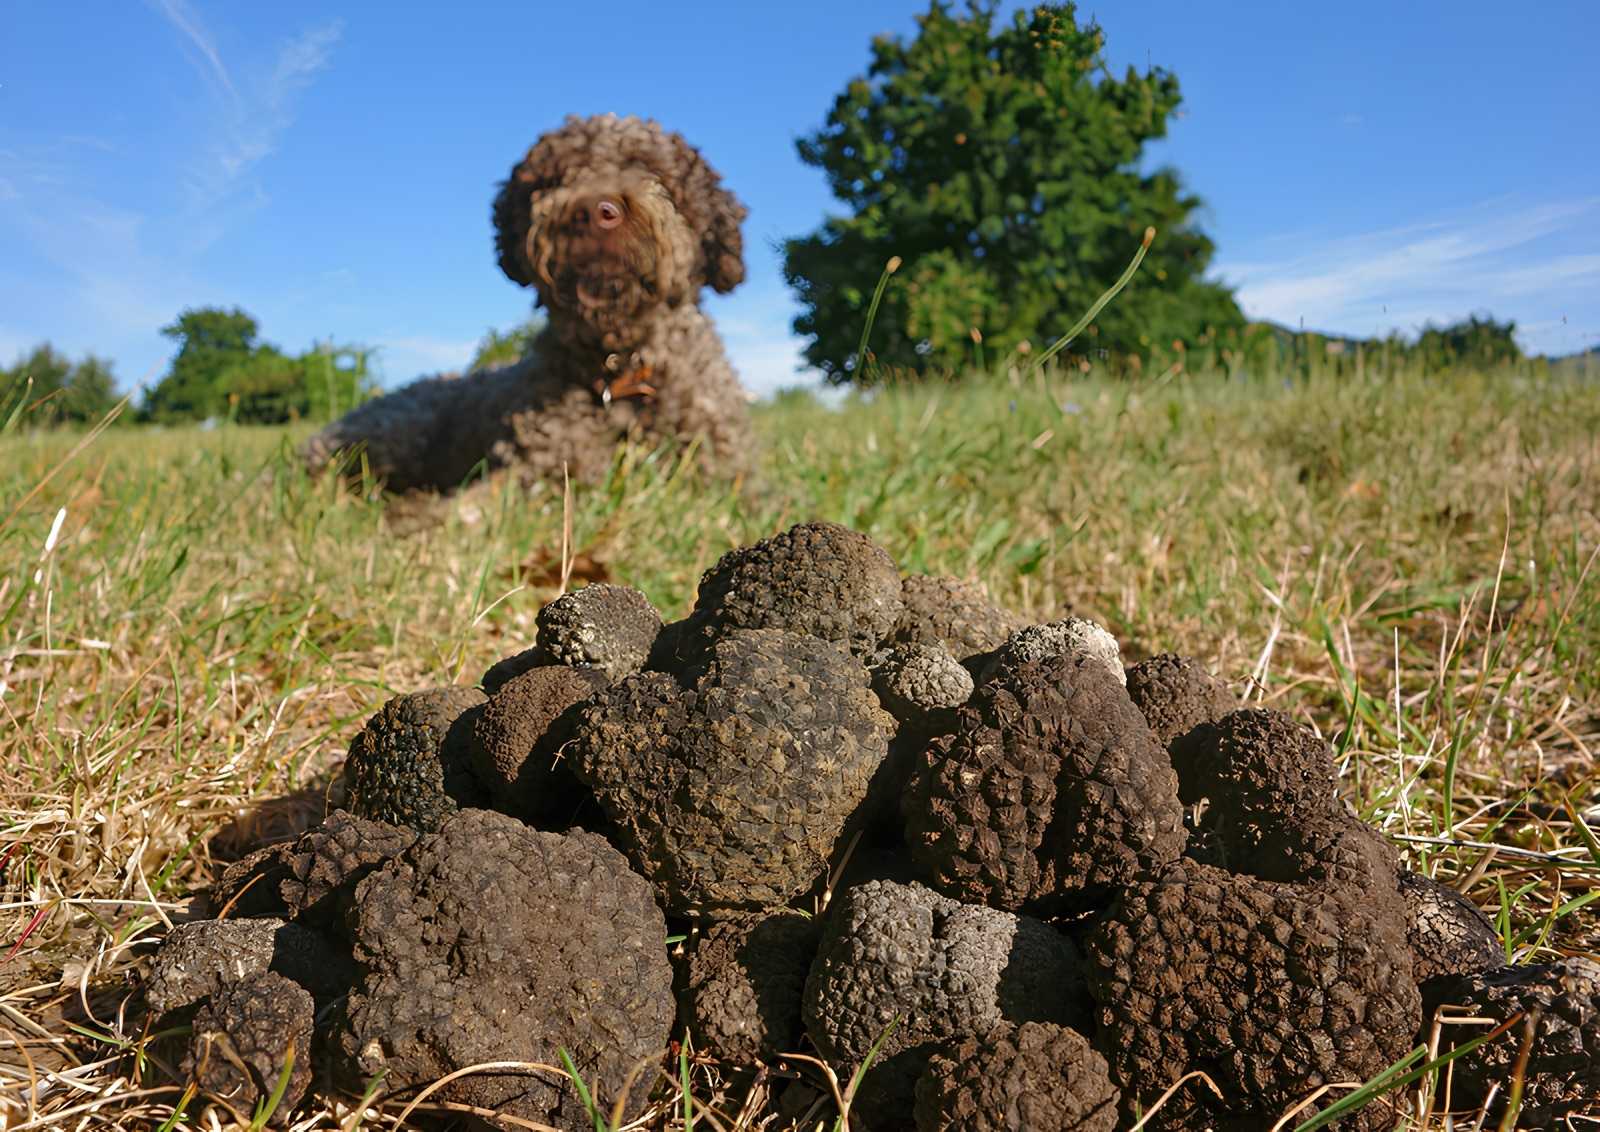 Common truffle-hunting breeds include Lagotto Romagnolo